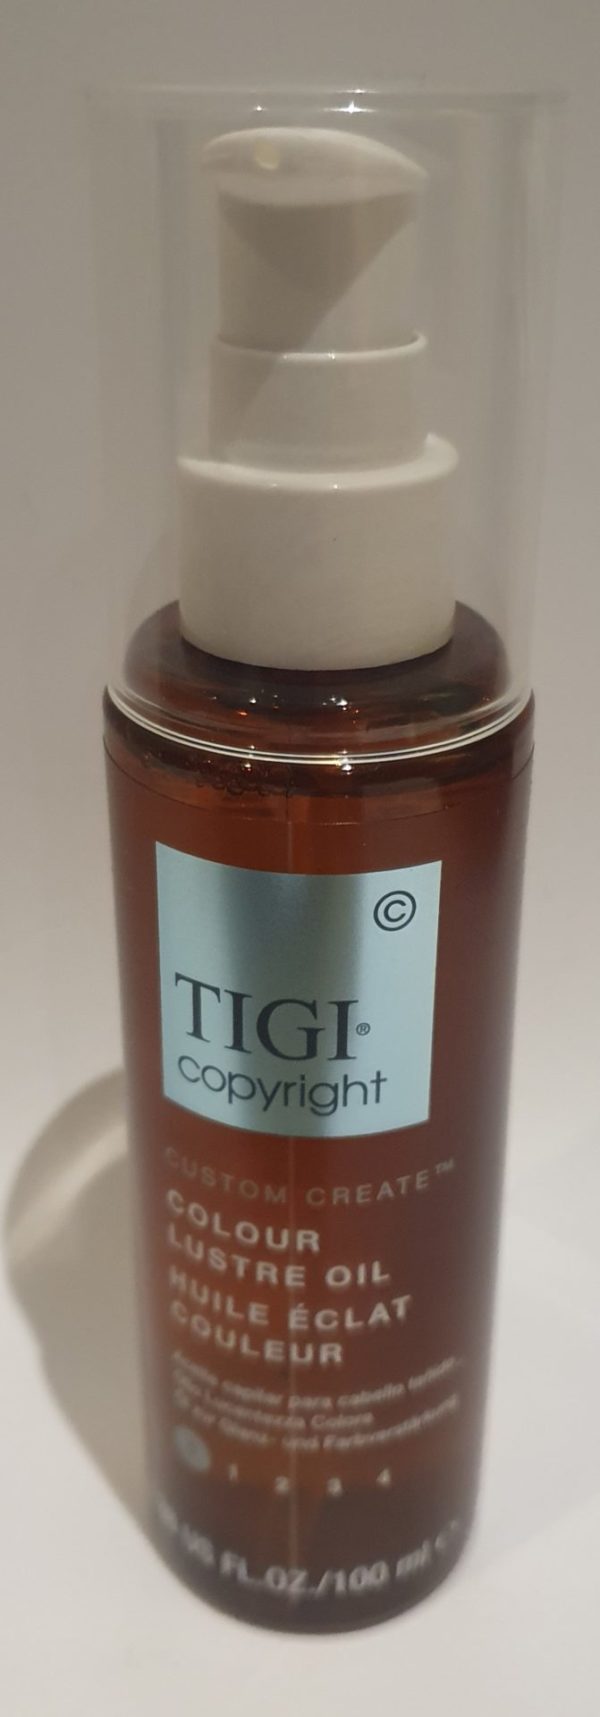 TIGI Copyright Colour Lustre Oil 100ml